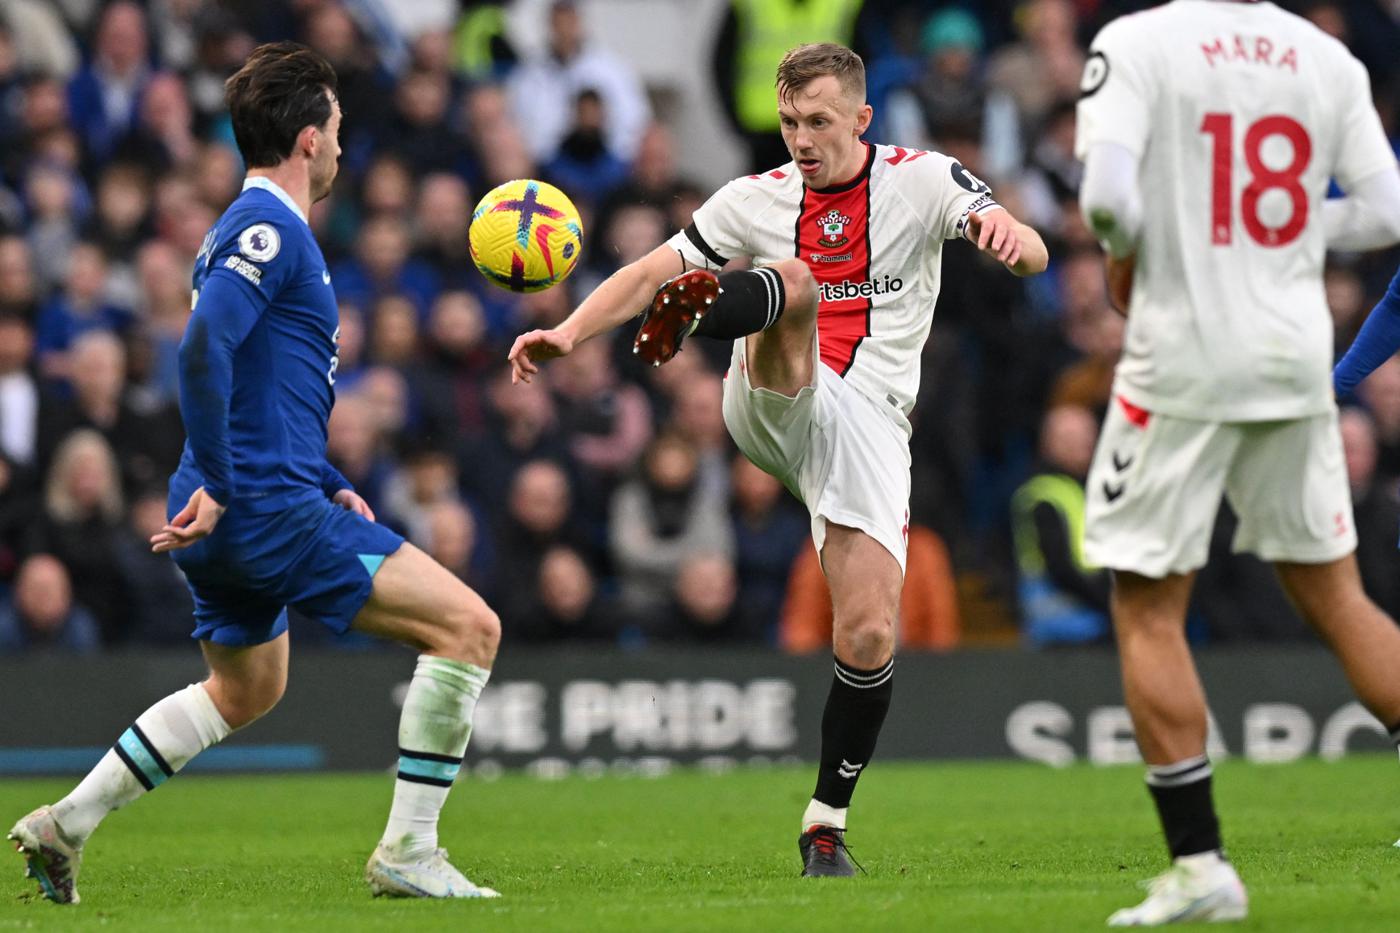 Chelsea - Southampton - 0:1. Englische Meisterschaft, Runde 24